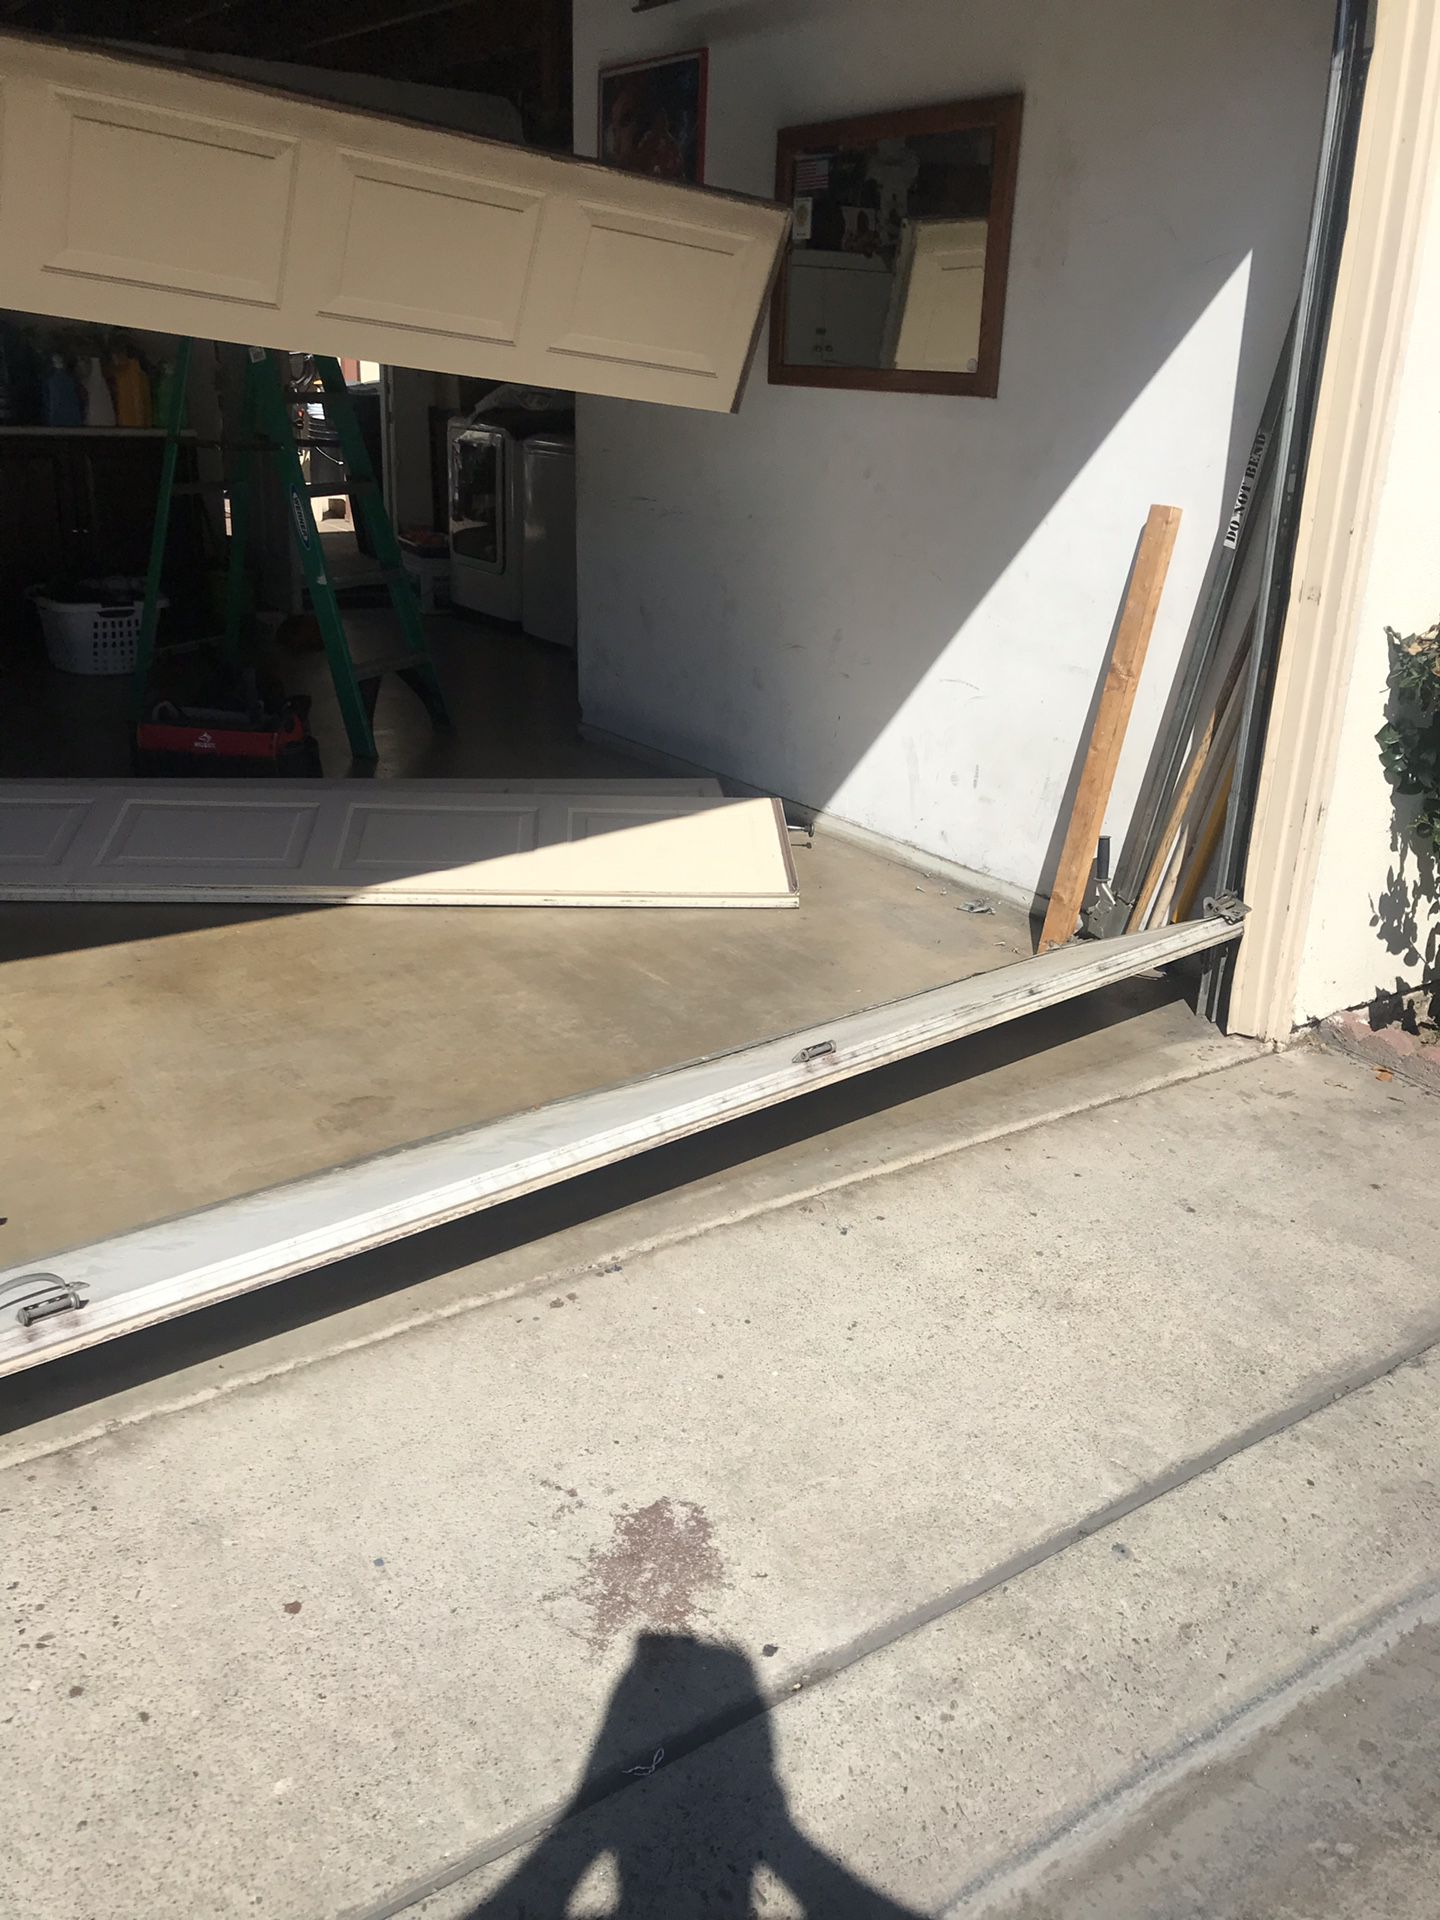 Garage doors repair and replace new doors replace doors jams cables openers rollers tracks $1